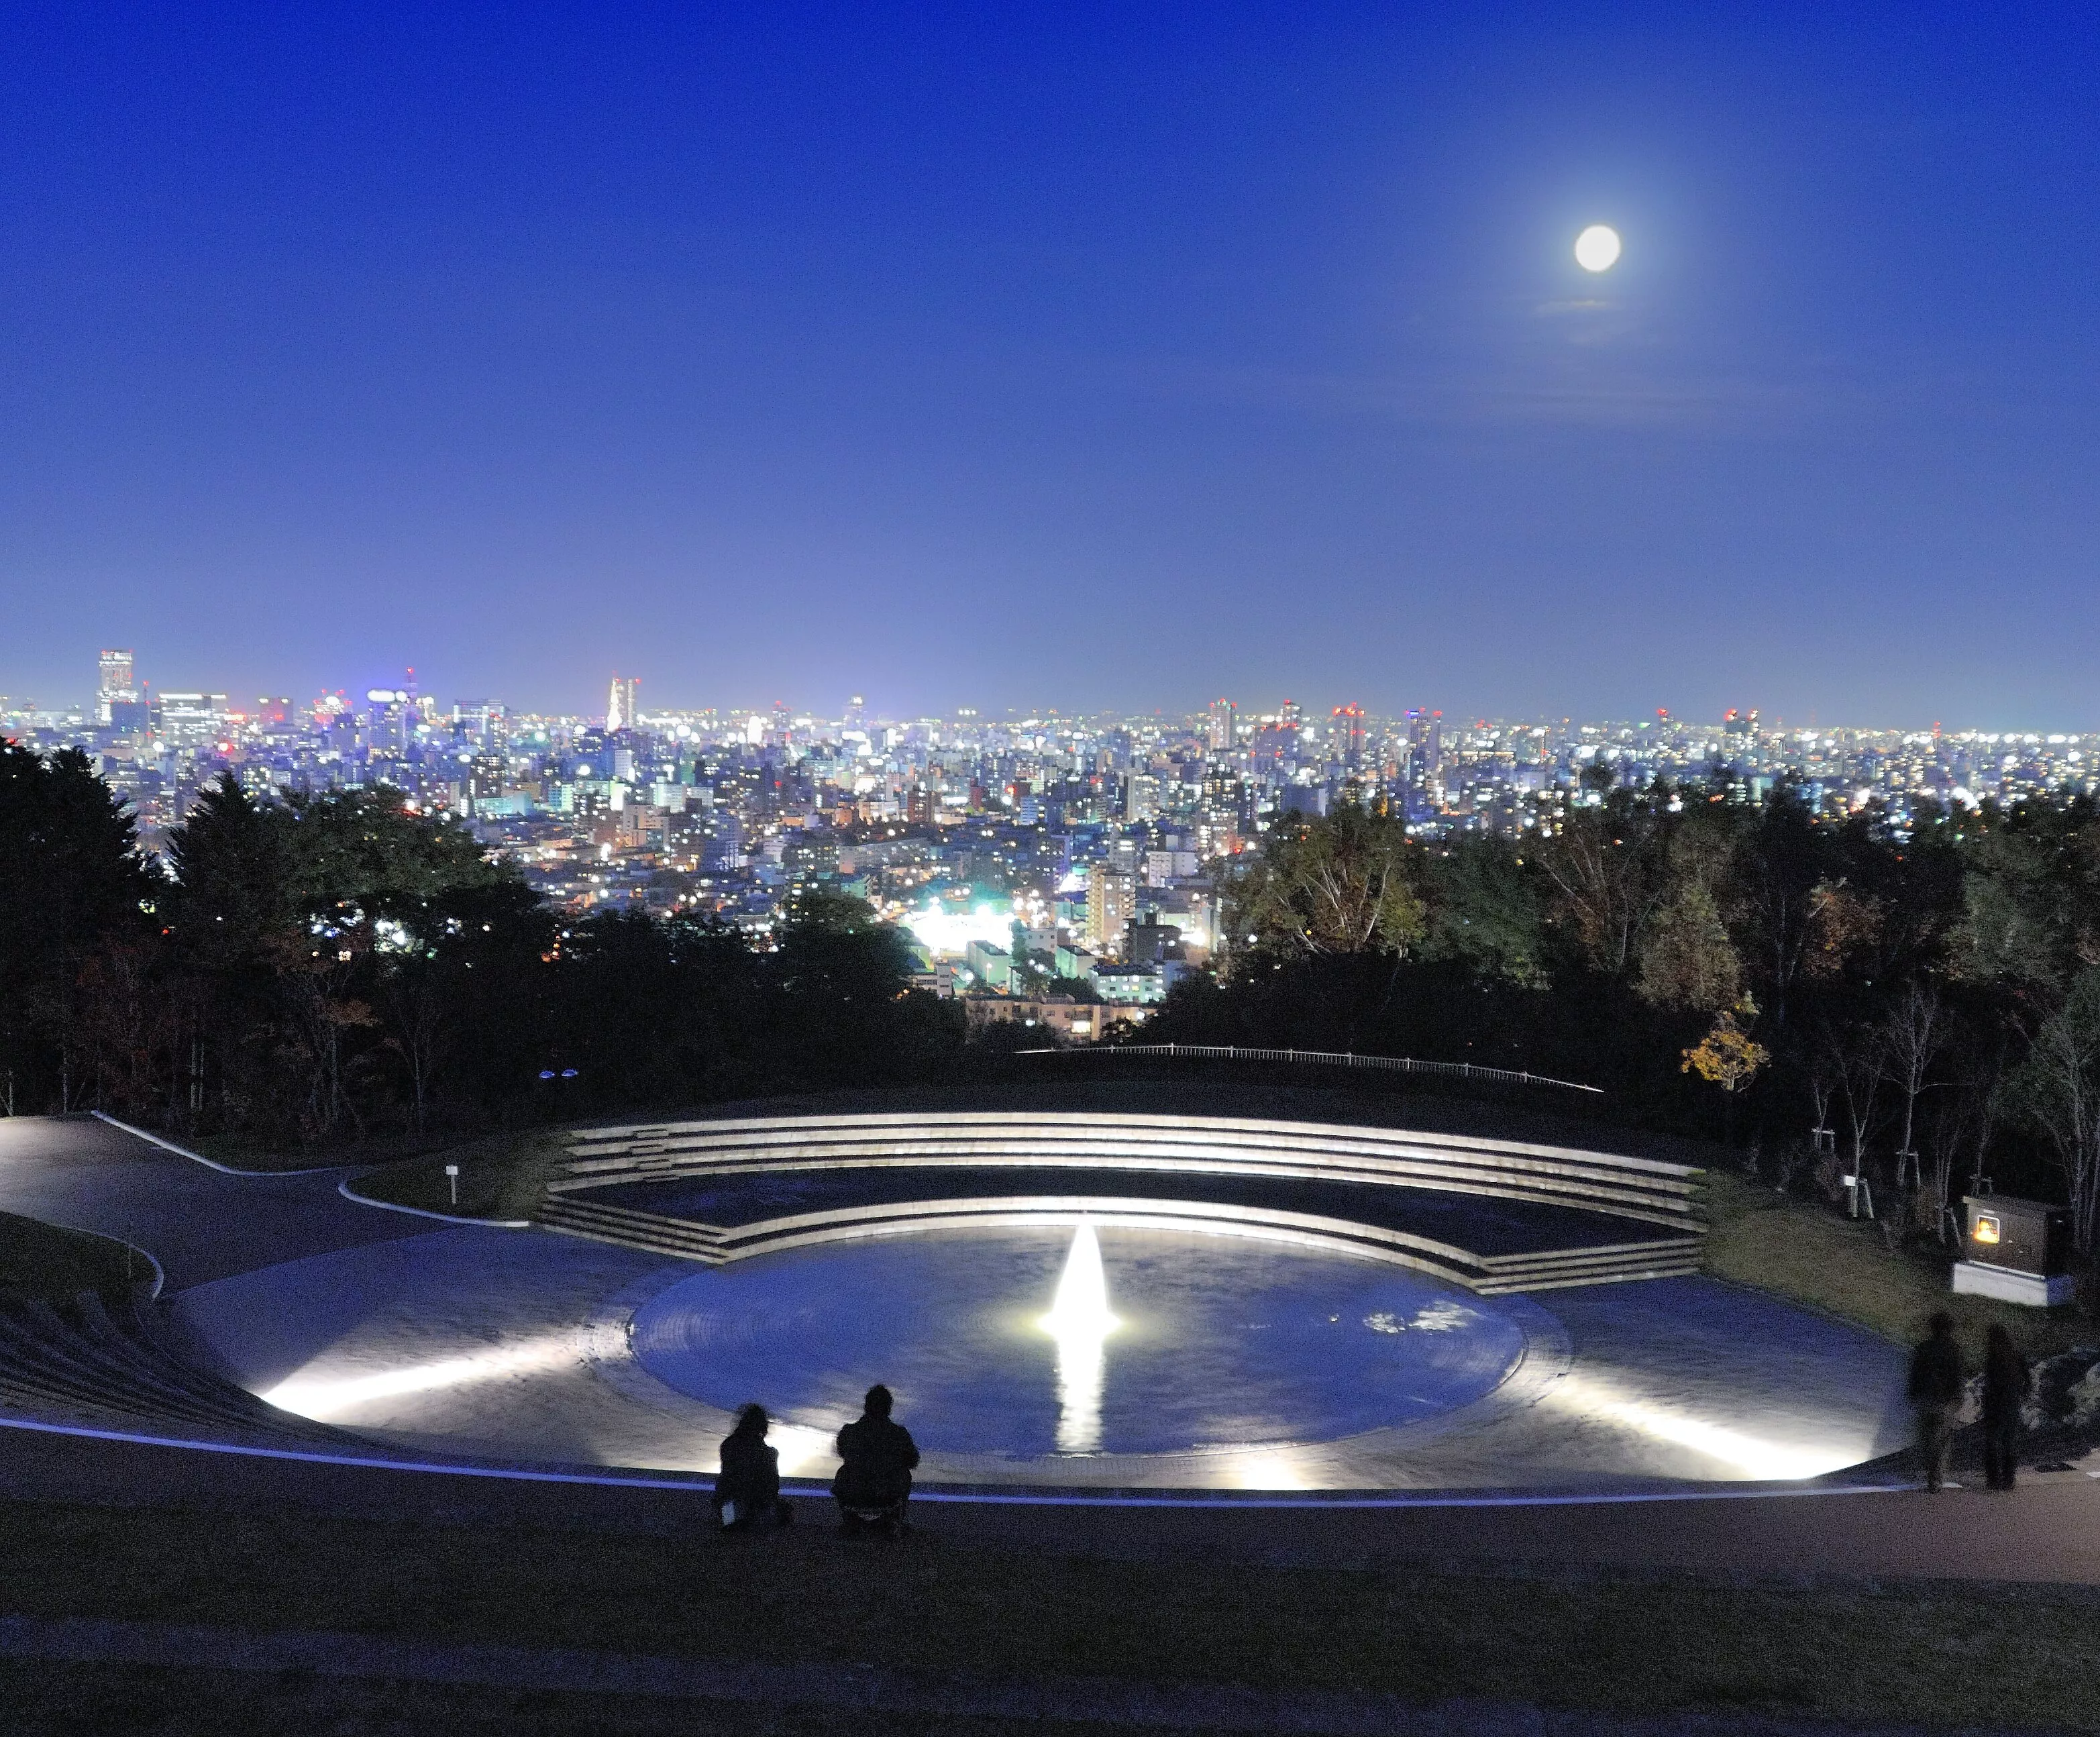 Asahiyama Memorial Park in Japan, East Asia | Parks - Rated 3.5